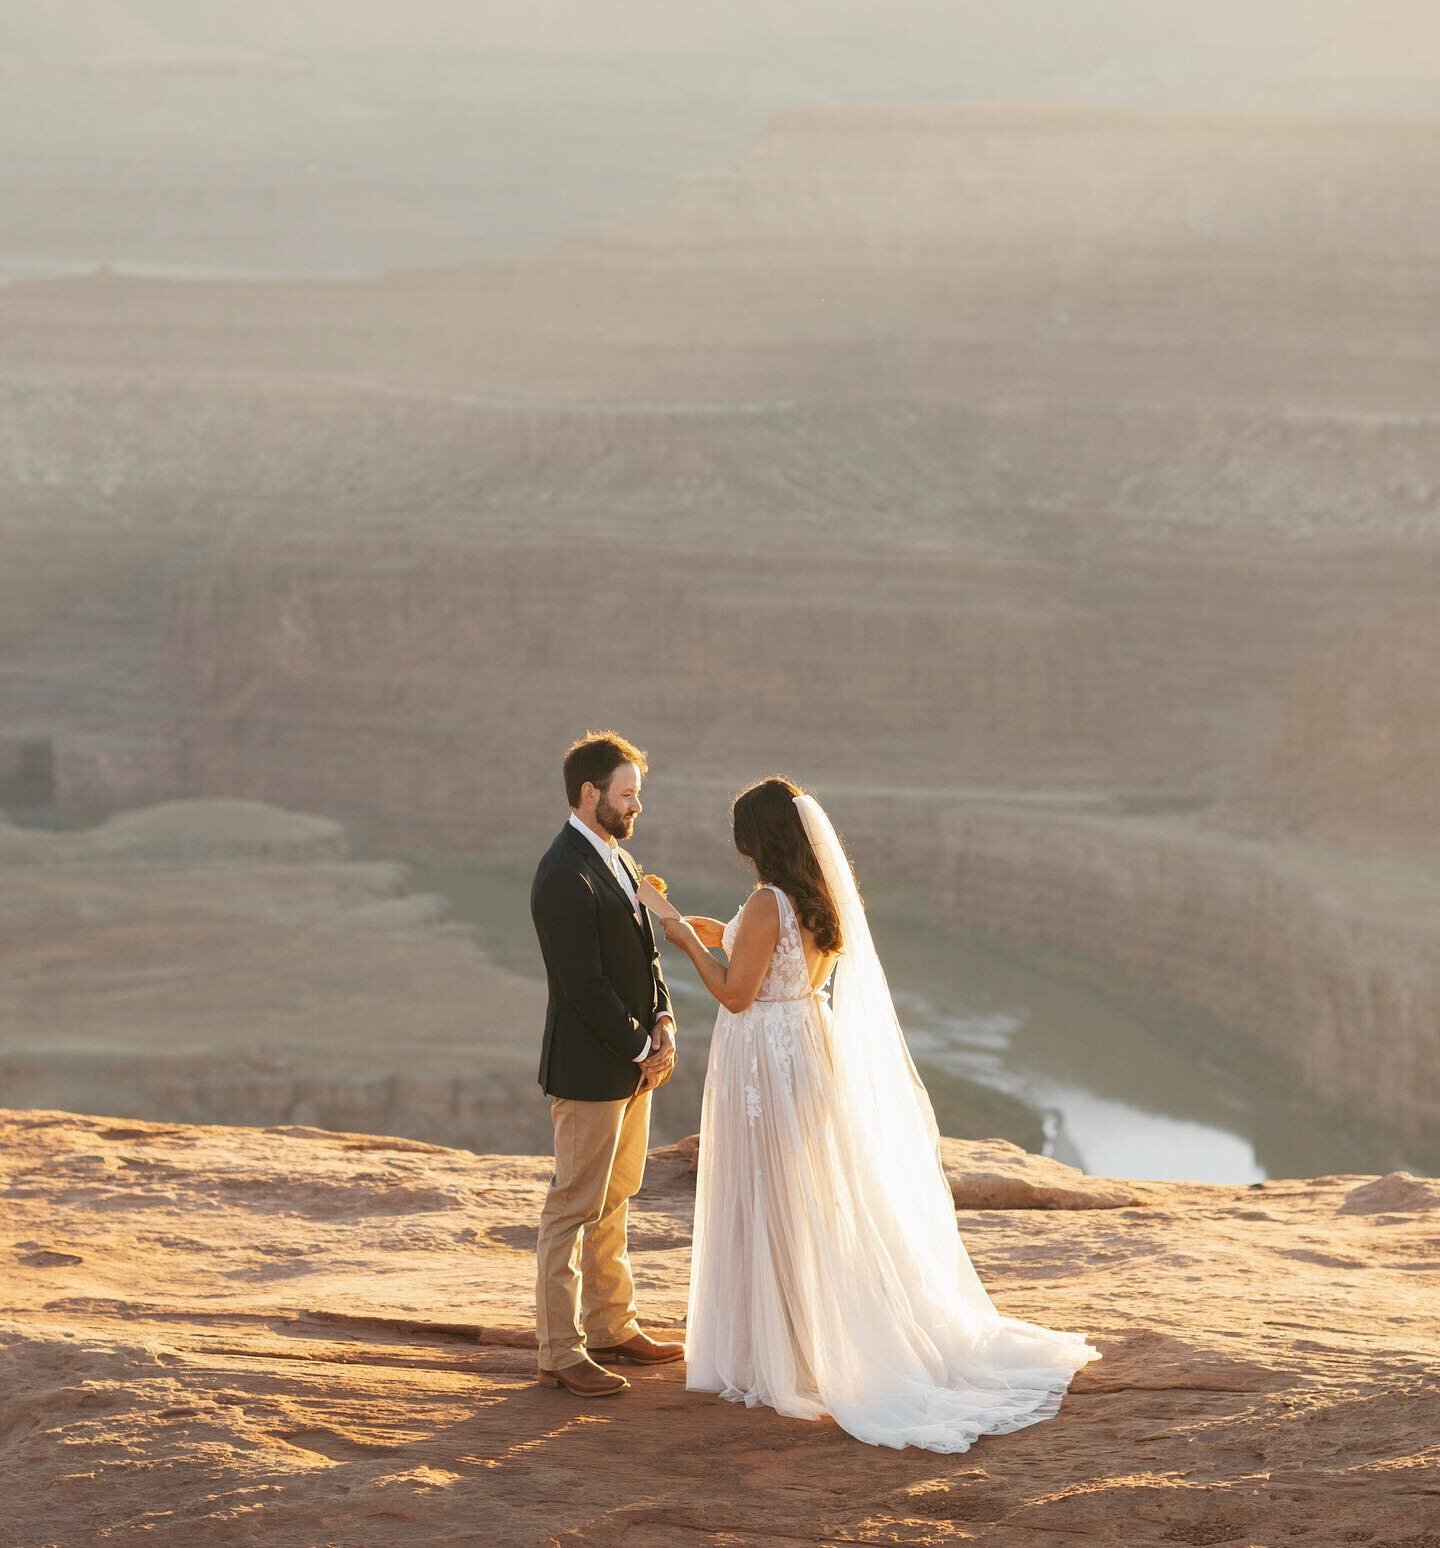 Private vows above the Colorado River and a quiet golden canyon. November 2023.